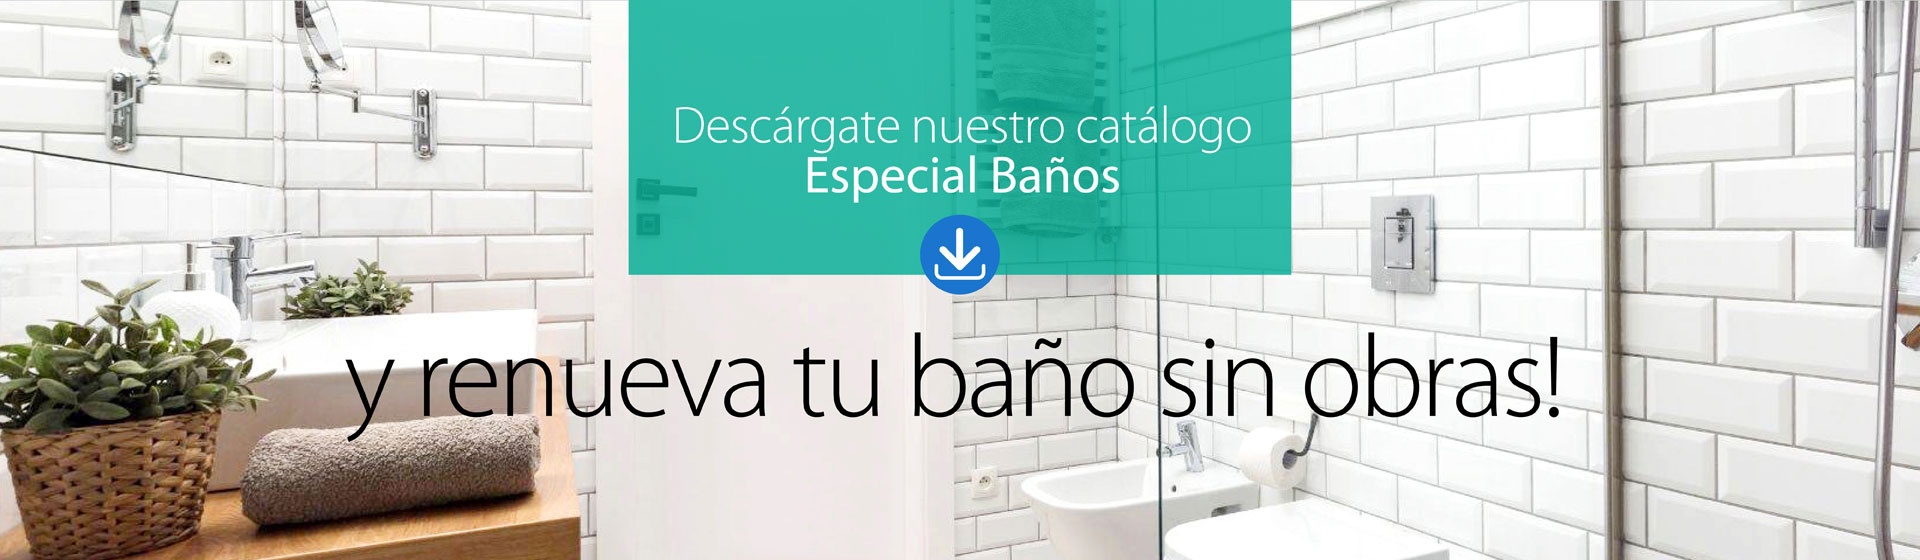 Catálogo especial baños